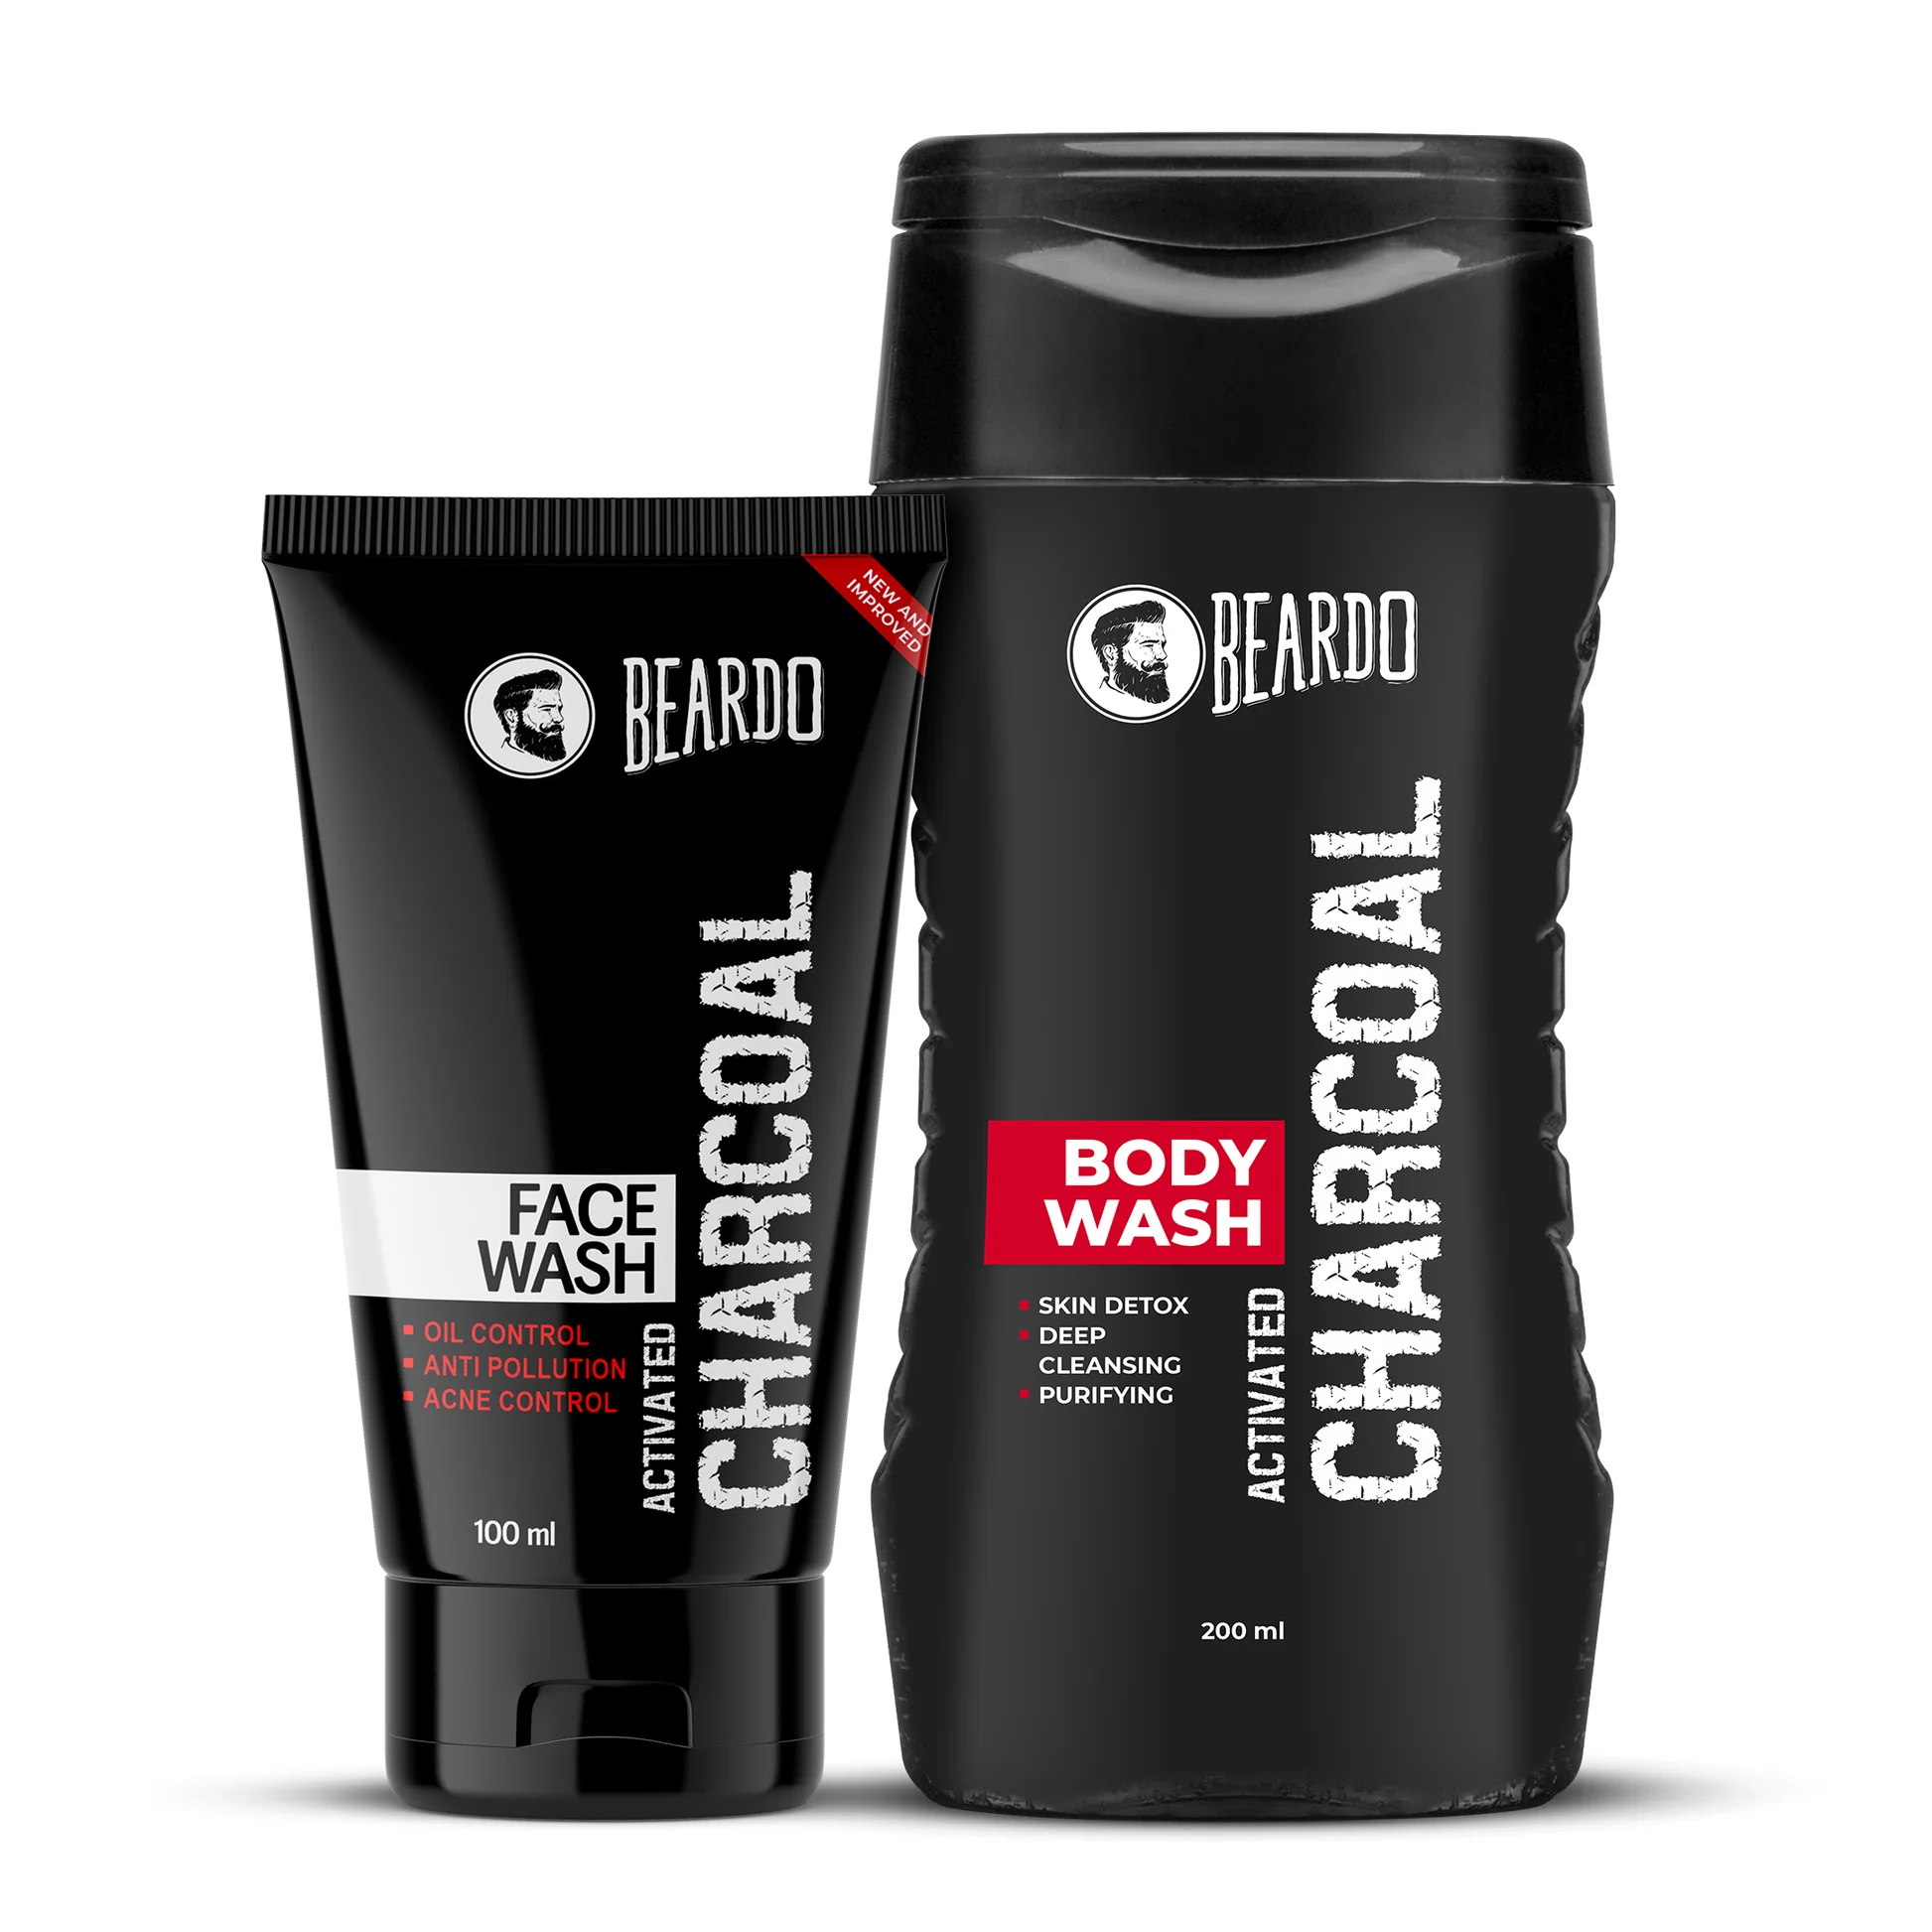 Beardo charcoal facewash and bodywash combo